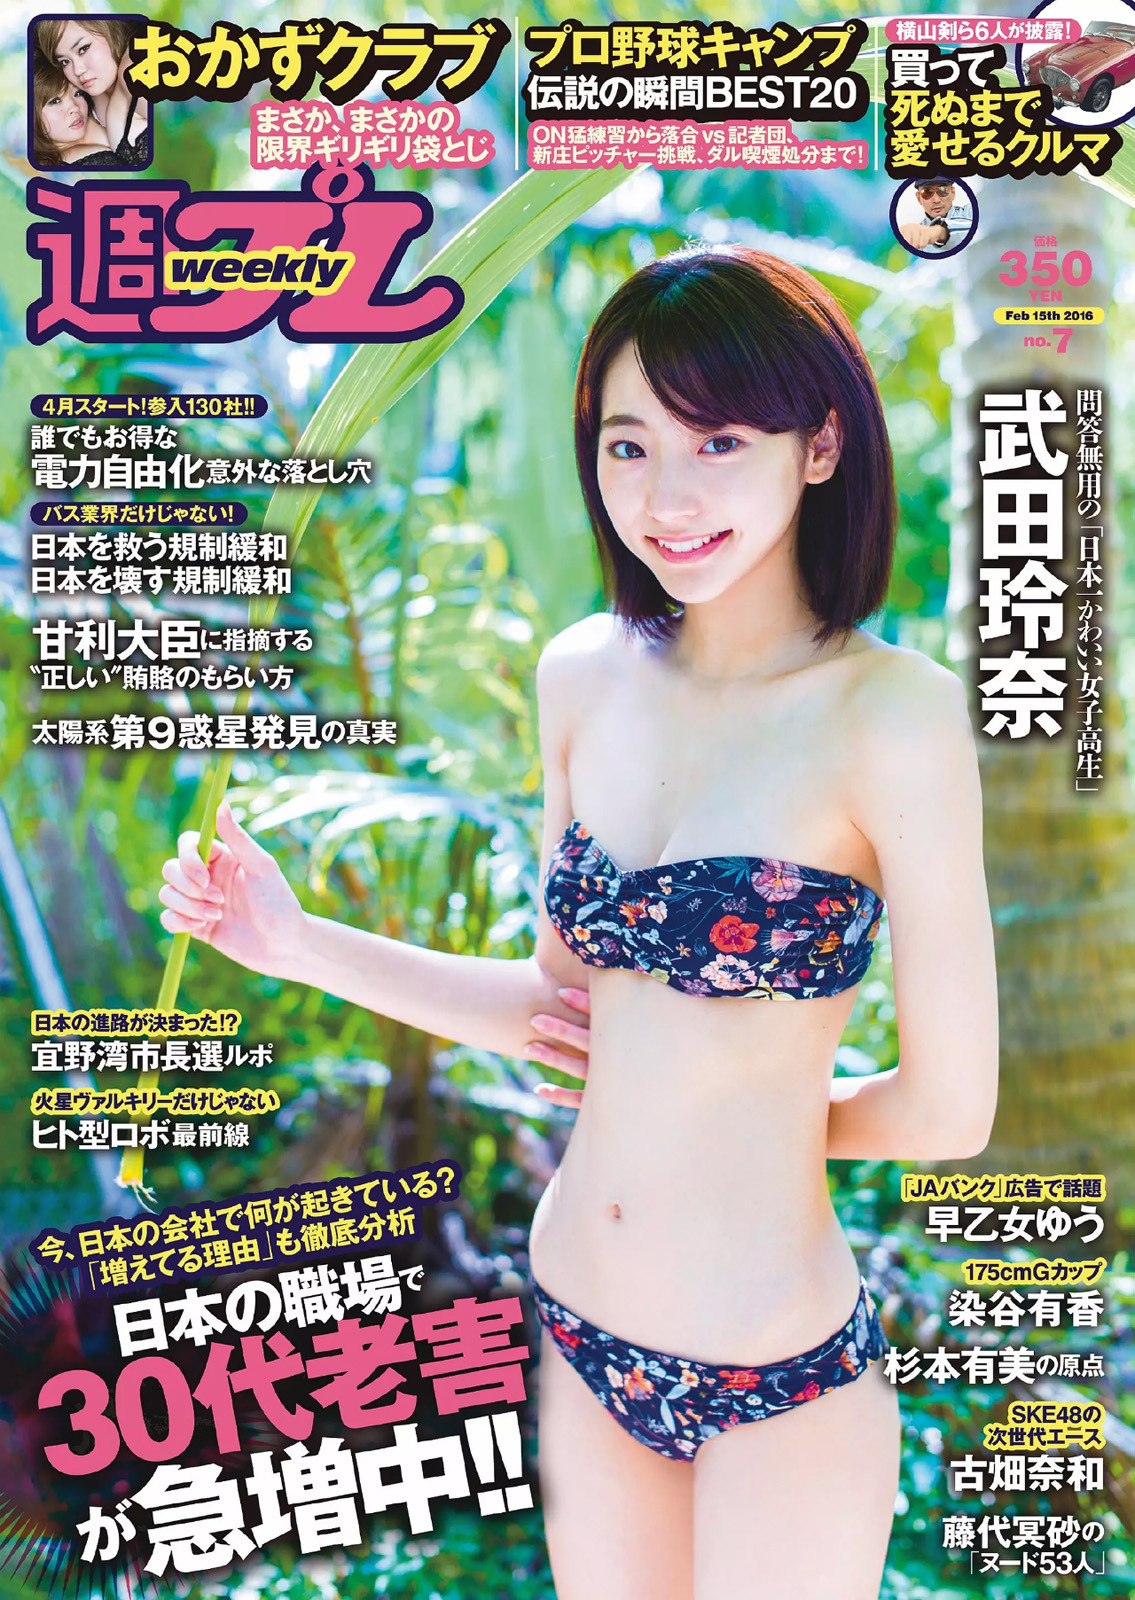 эротика в японских журналах фото 118